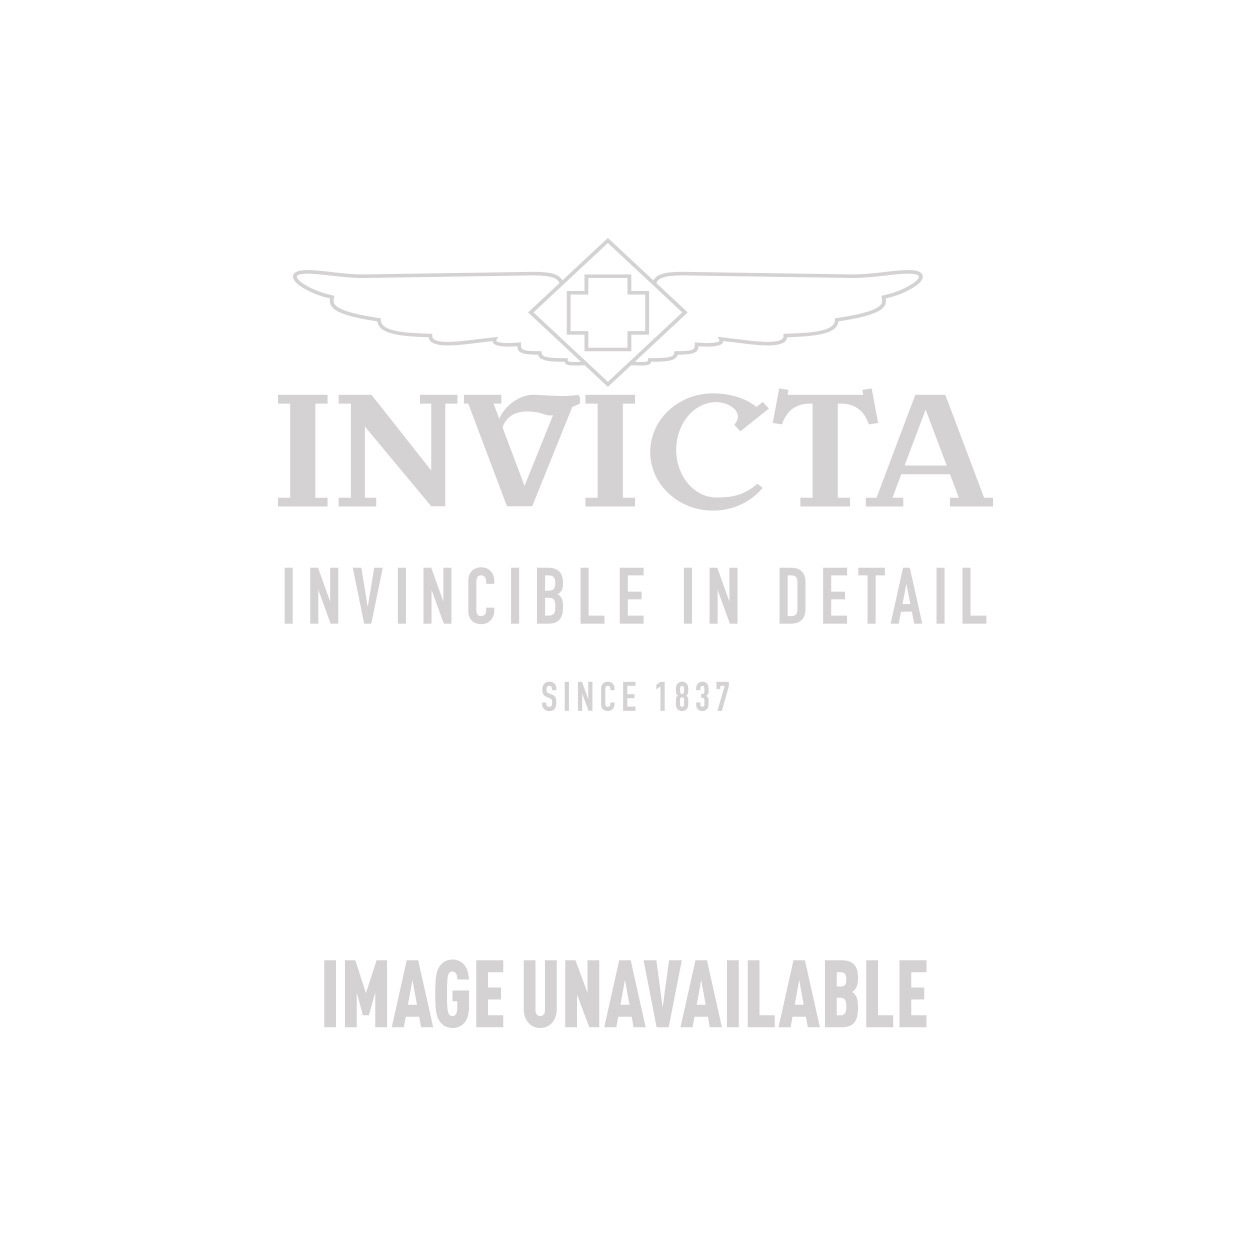 Invicta Subaqua Quartz Watch - Gunmetal, Stainless Steel case Stainless Steel band - Model 18235